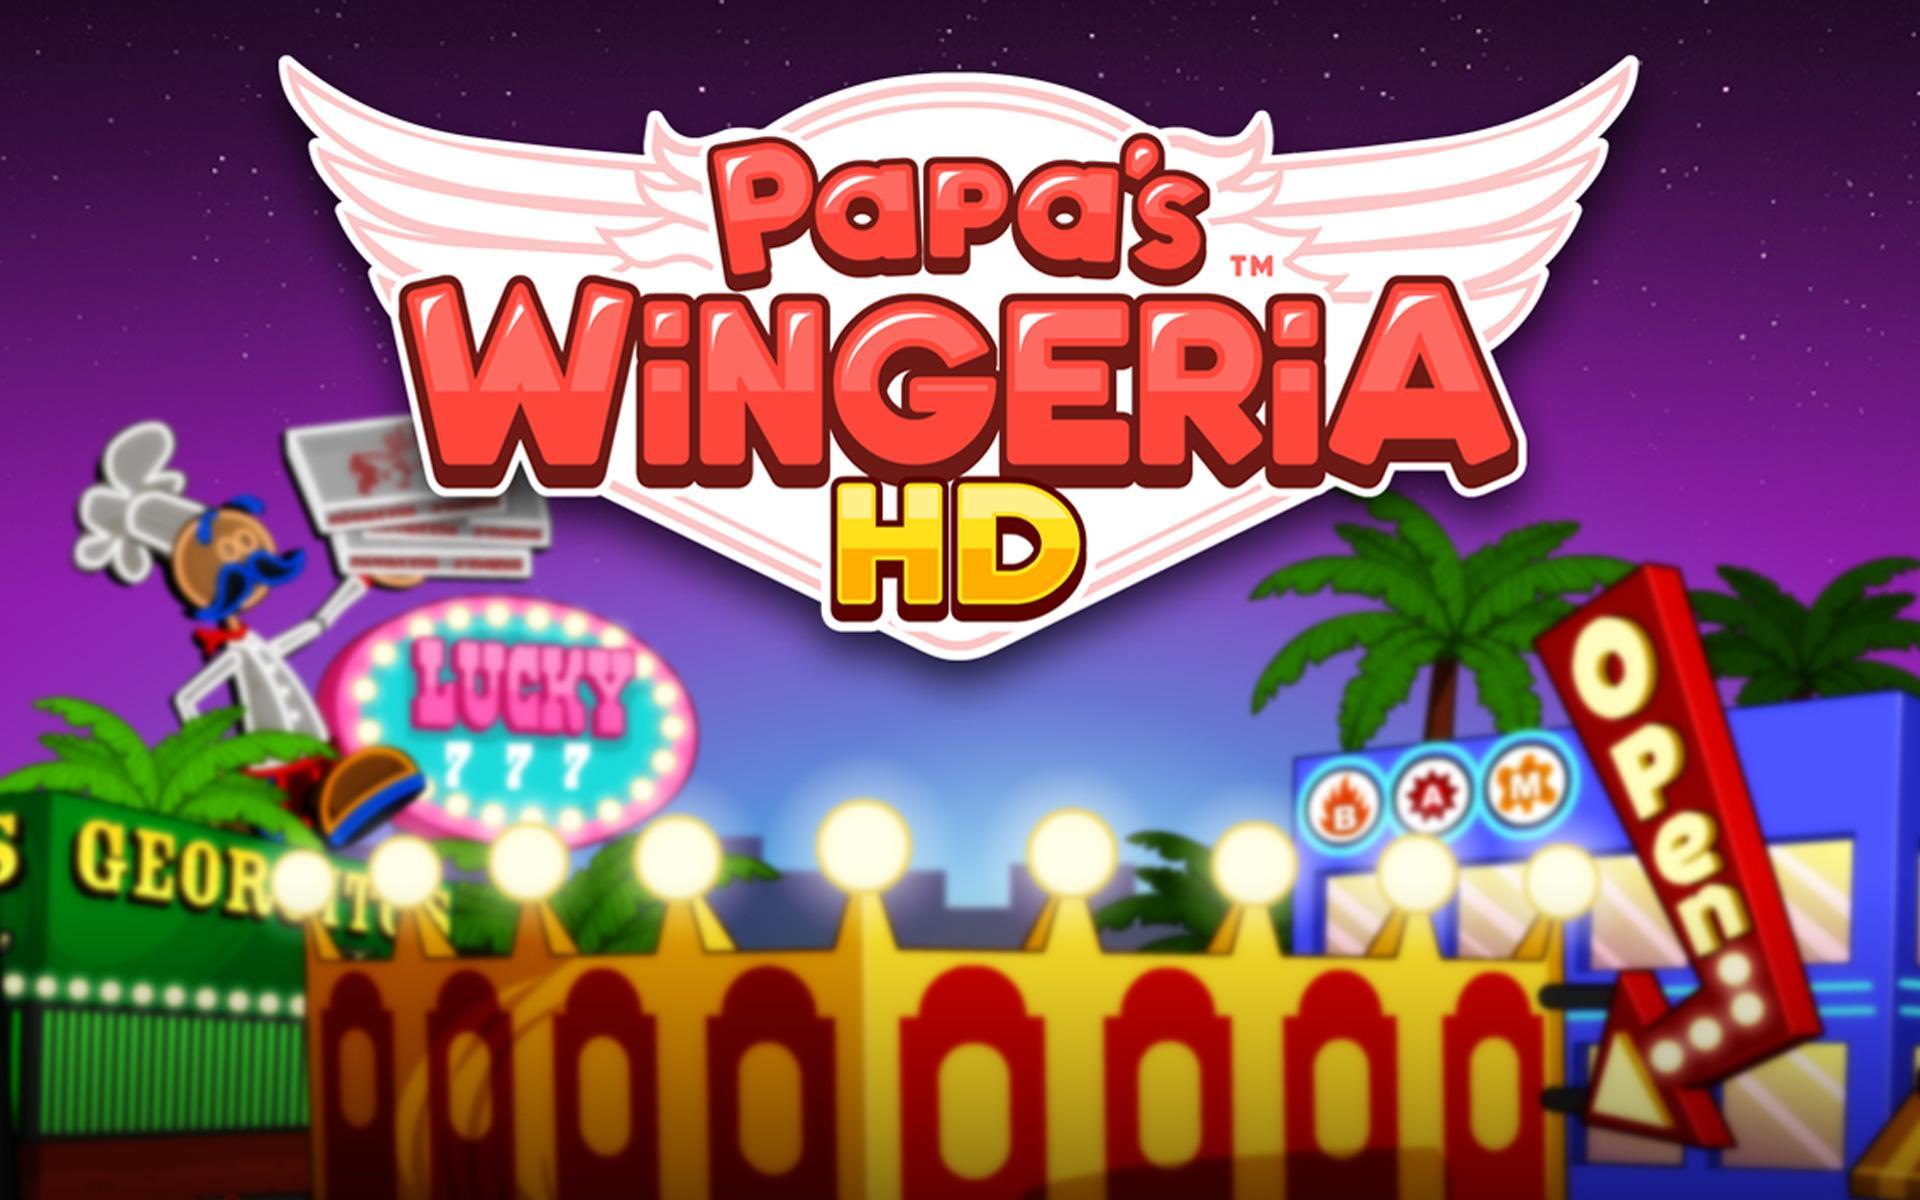 Screenshot 1 of Wingeria HD ni Papa 